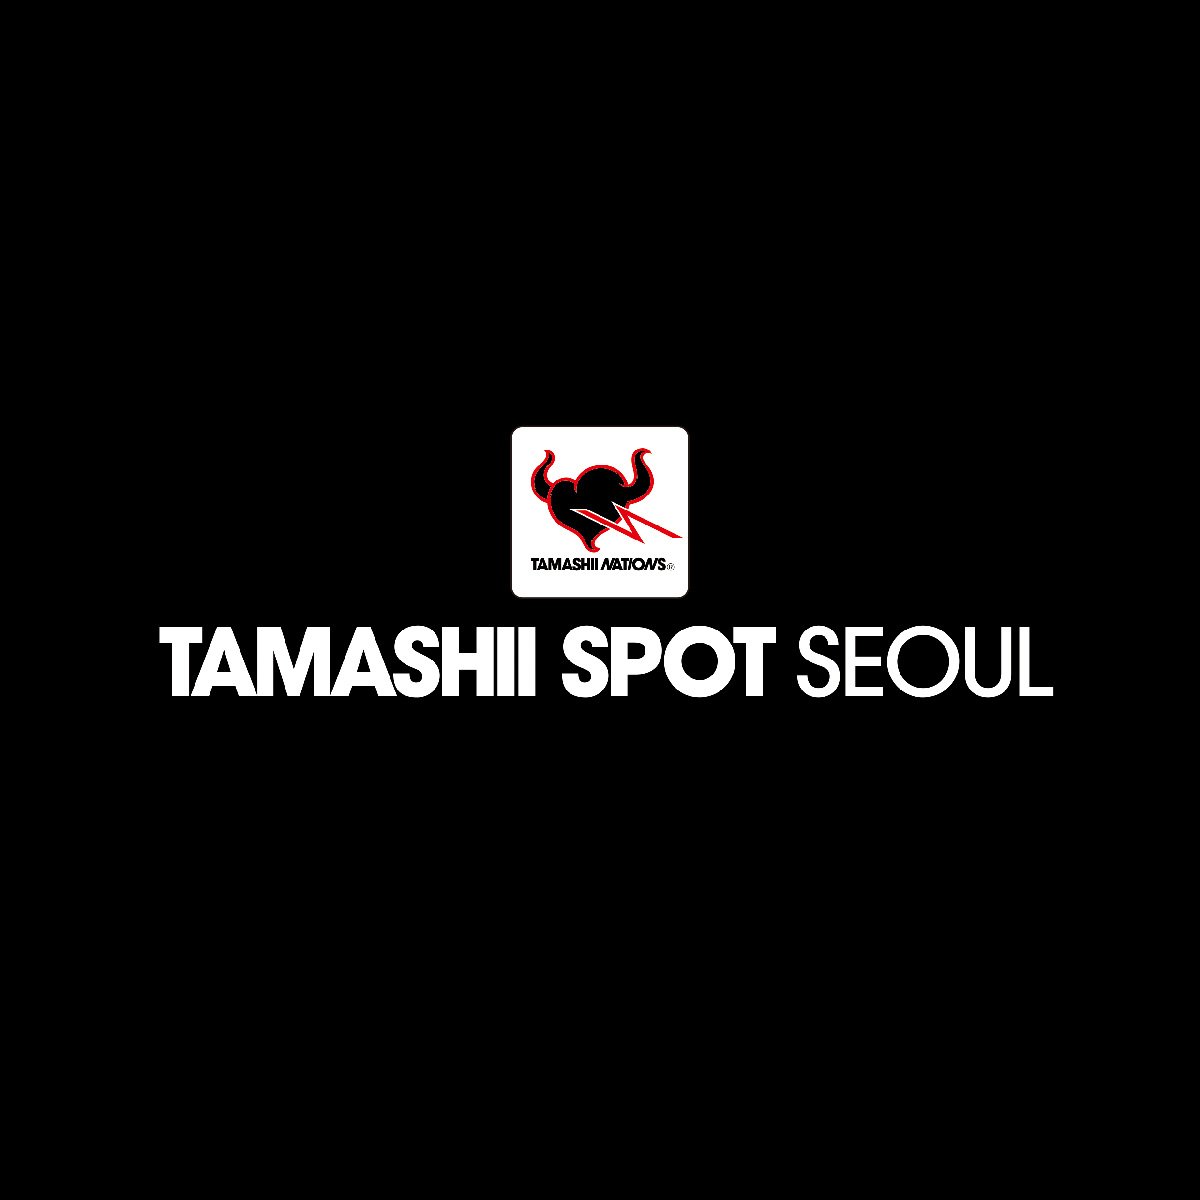 『TAMASHII SPOT SEOUL』img